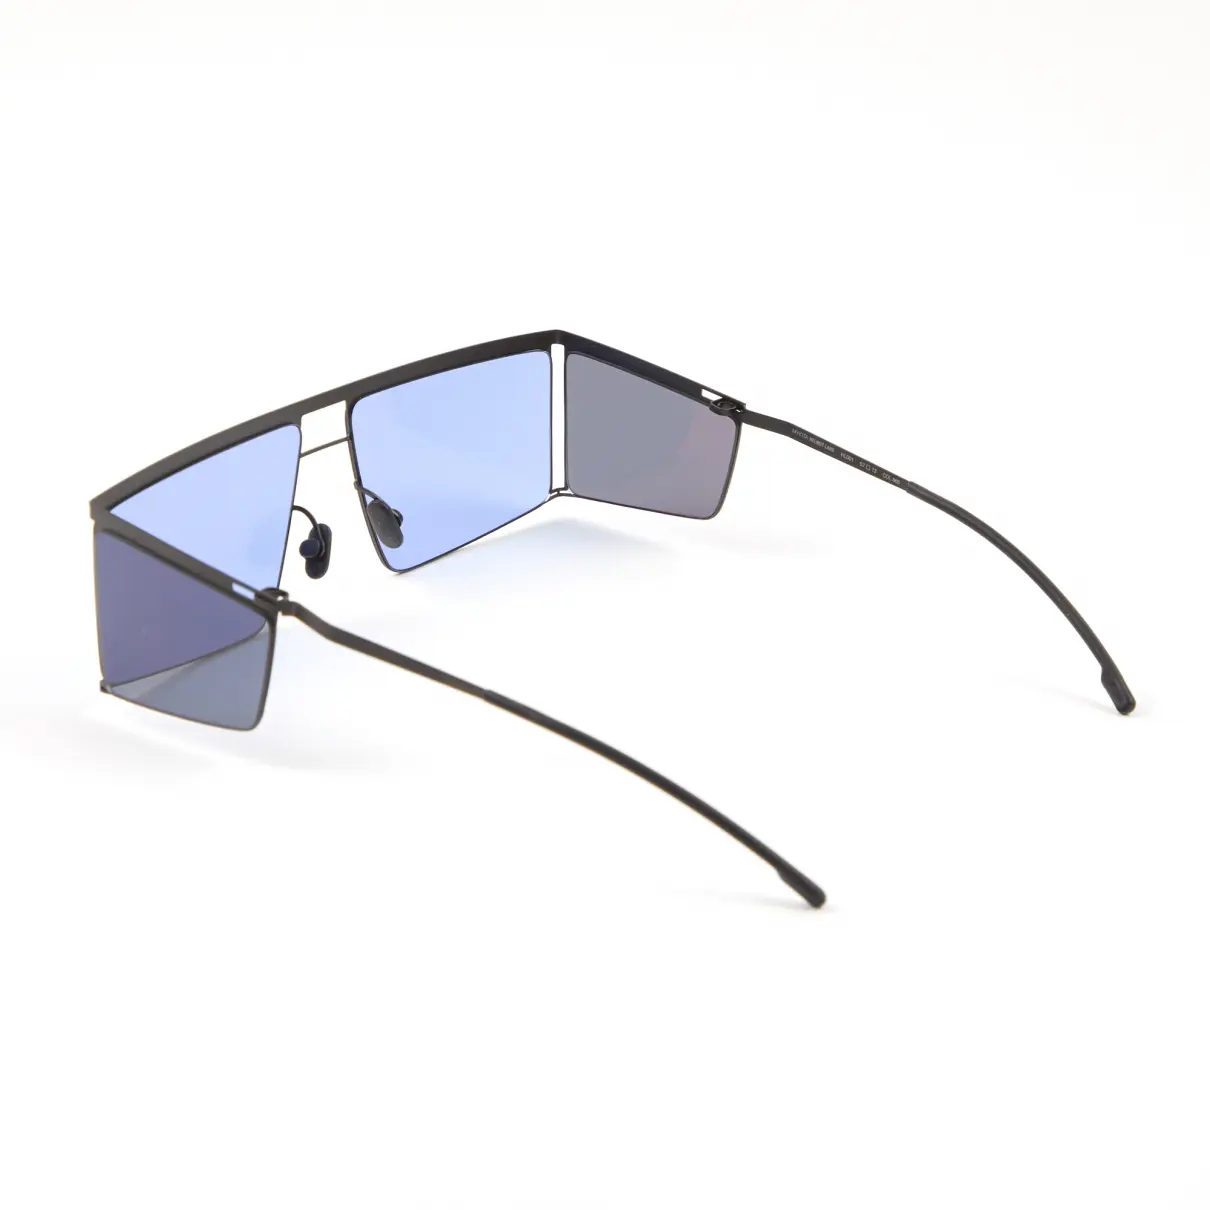 Luxury Helmut Lang Sunglasses Women